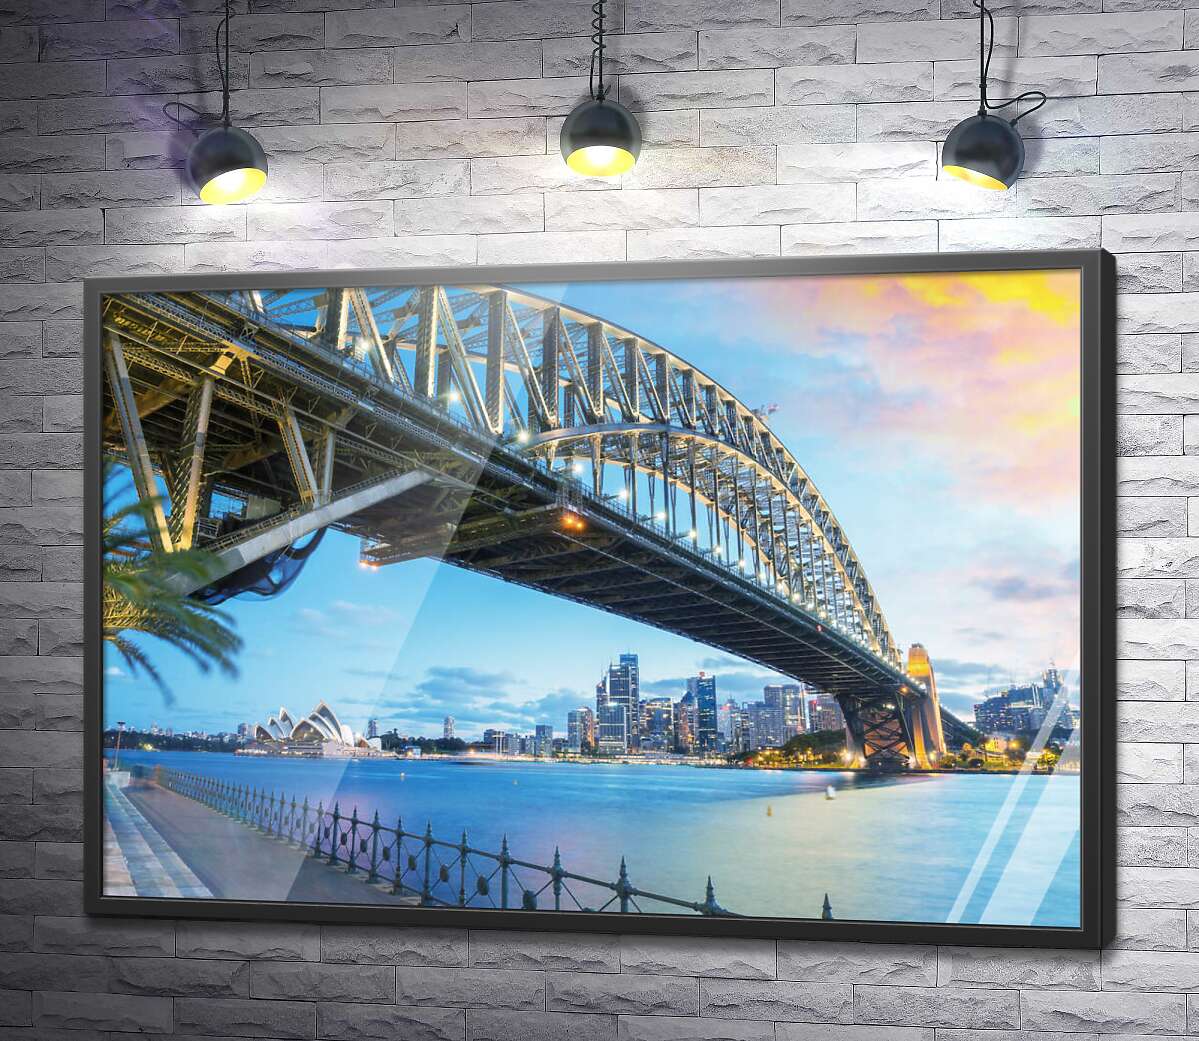 постер Сиднейский мост на фоне небесной лазури